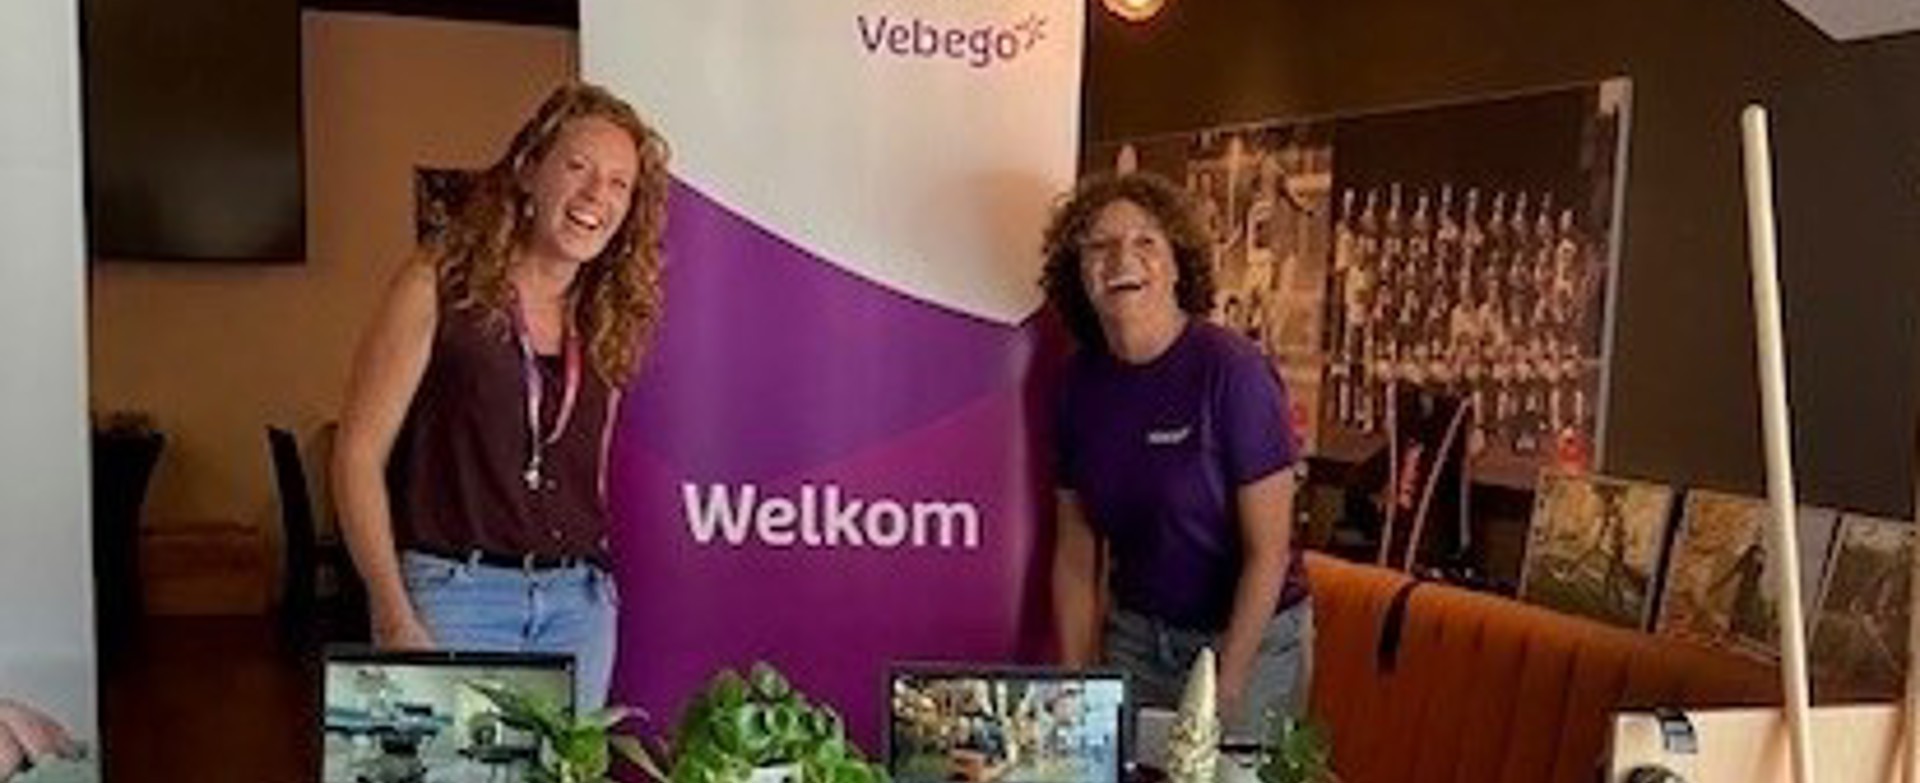 Vebego Groen Stage VSO Scholen Limburg